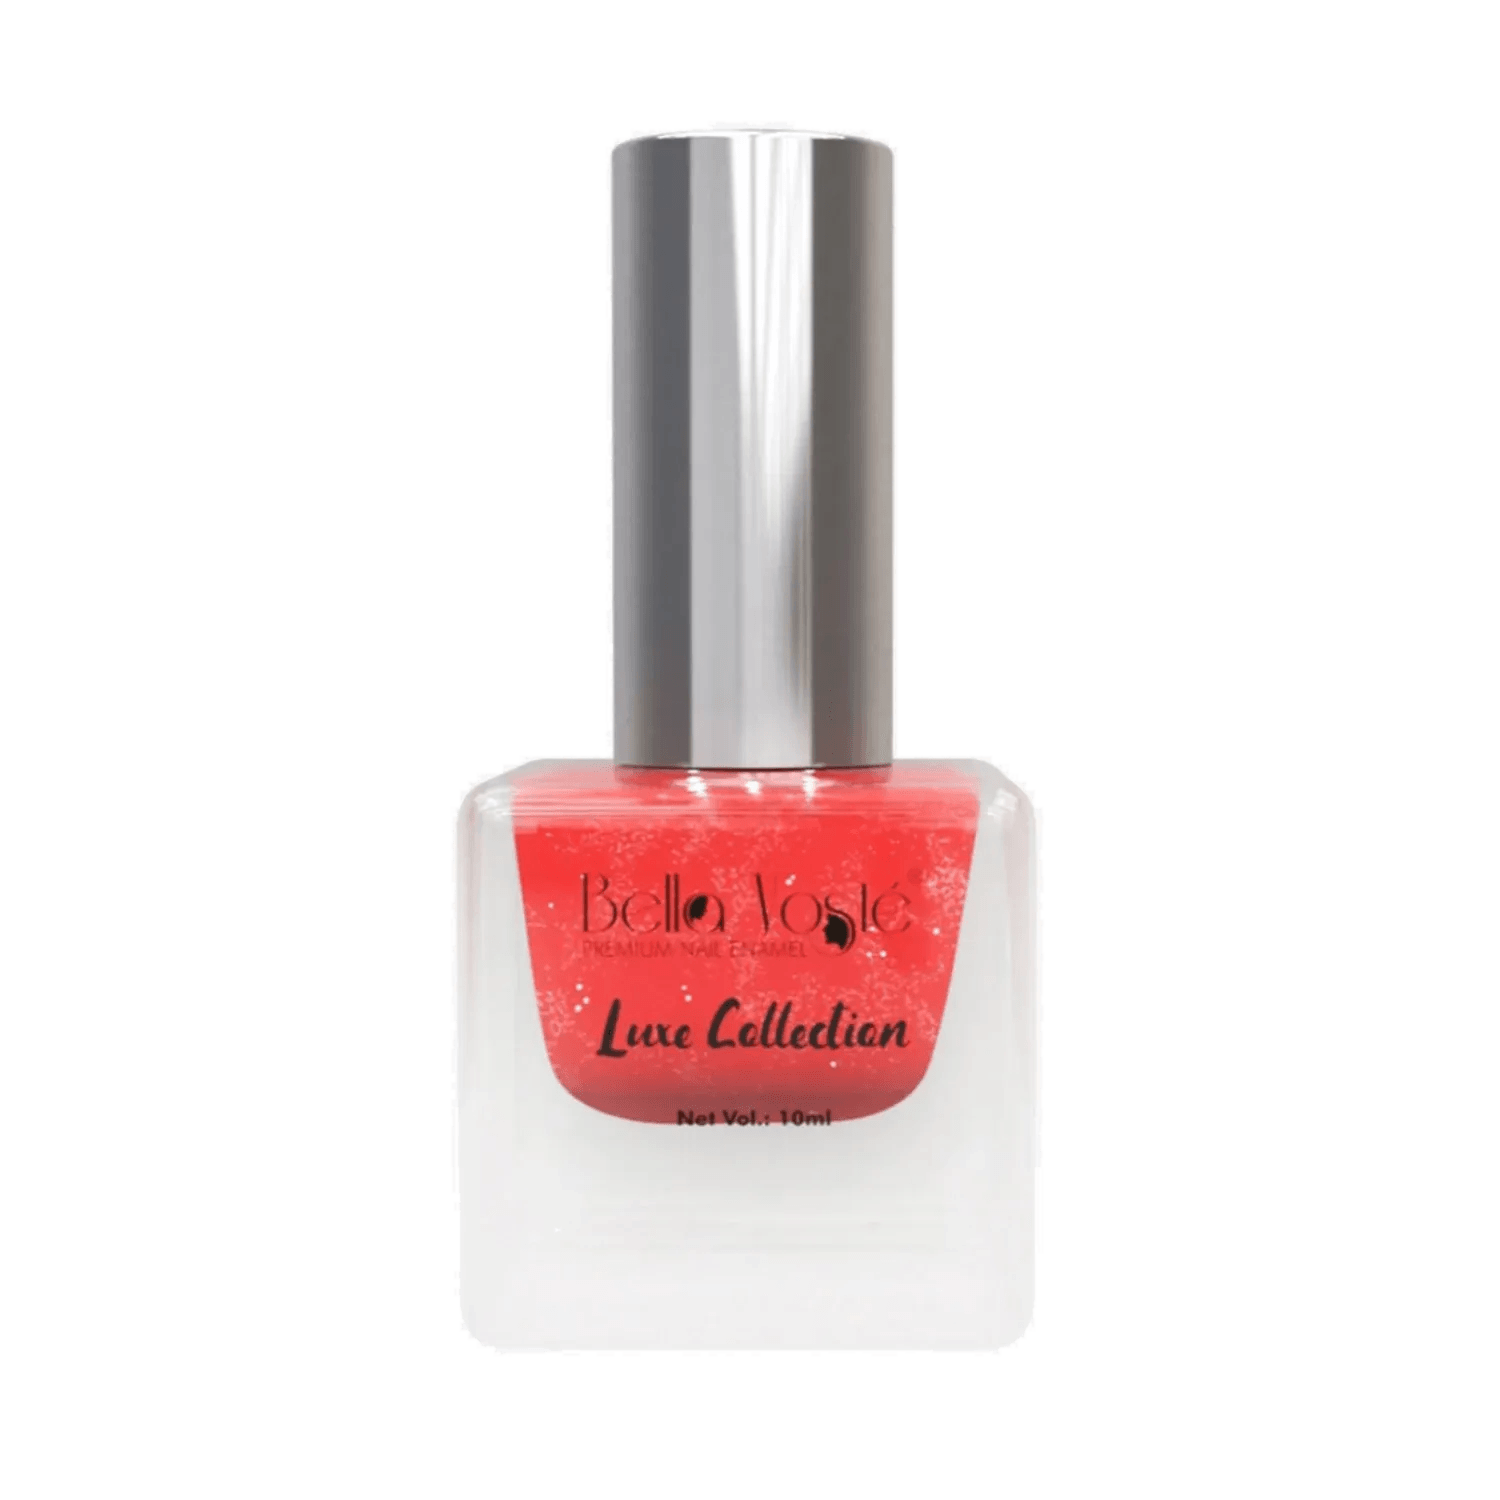 Bella Voste | Bella Voste Luxe Celebrations Nail Polish - Shade 205 (10ml)